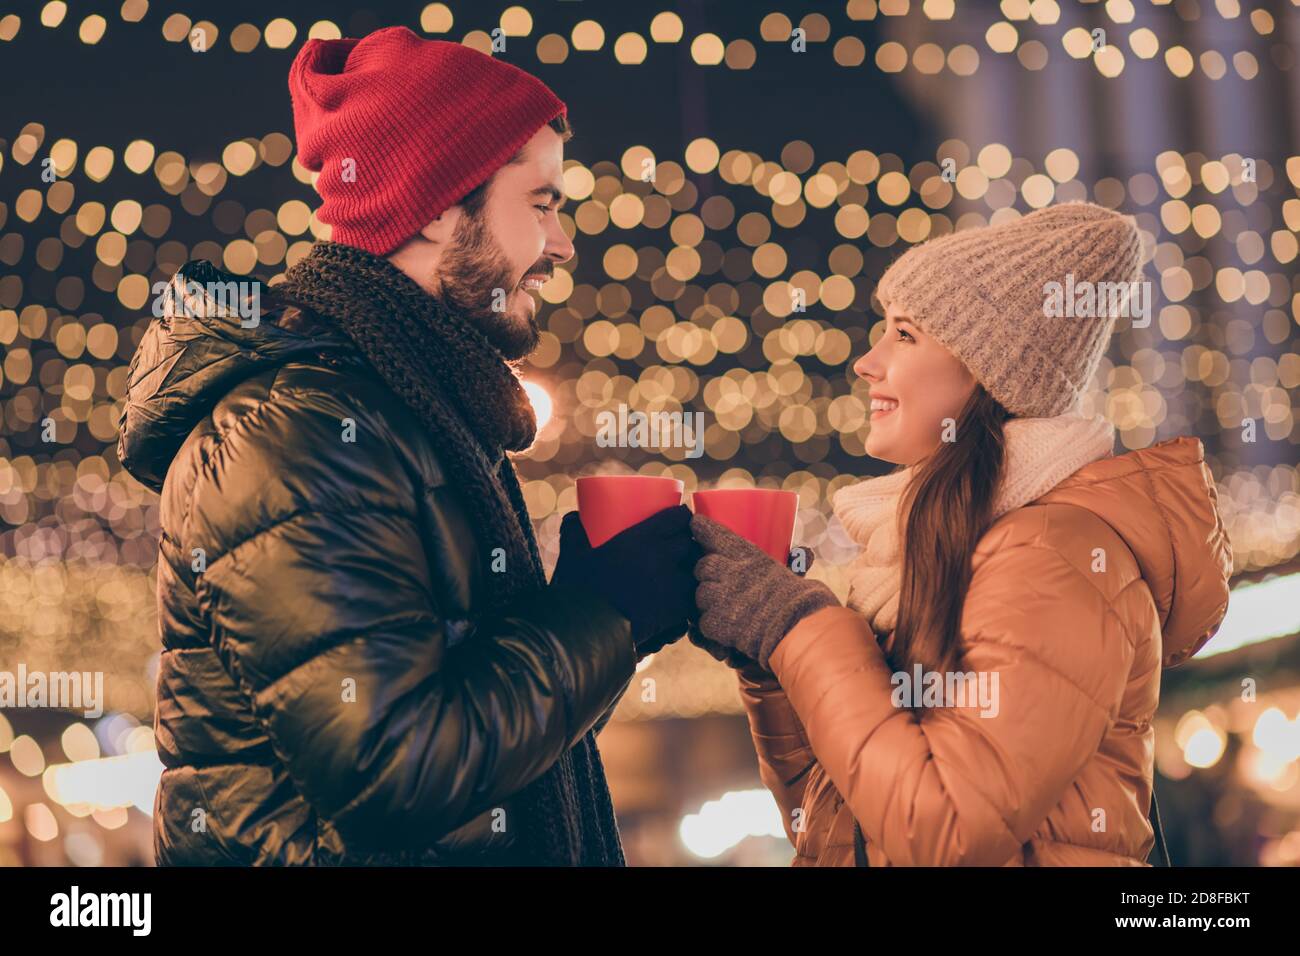 https://c8.alamy.com/comp/2D8FBKT/photo-of-two-people-couple-toast-hot-coffee-beverage-mug-under-outdoors-evening-x-mas-spirit-lights-wear-season-outerwear-2D8FBKT.jpg